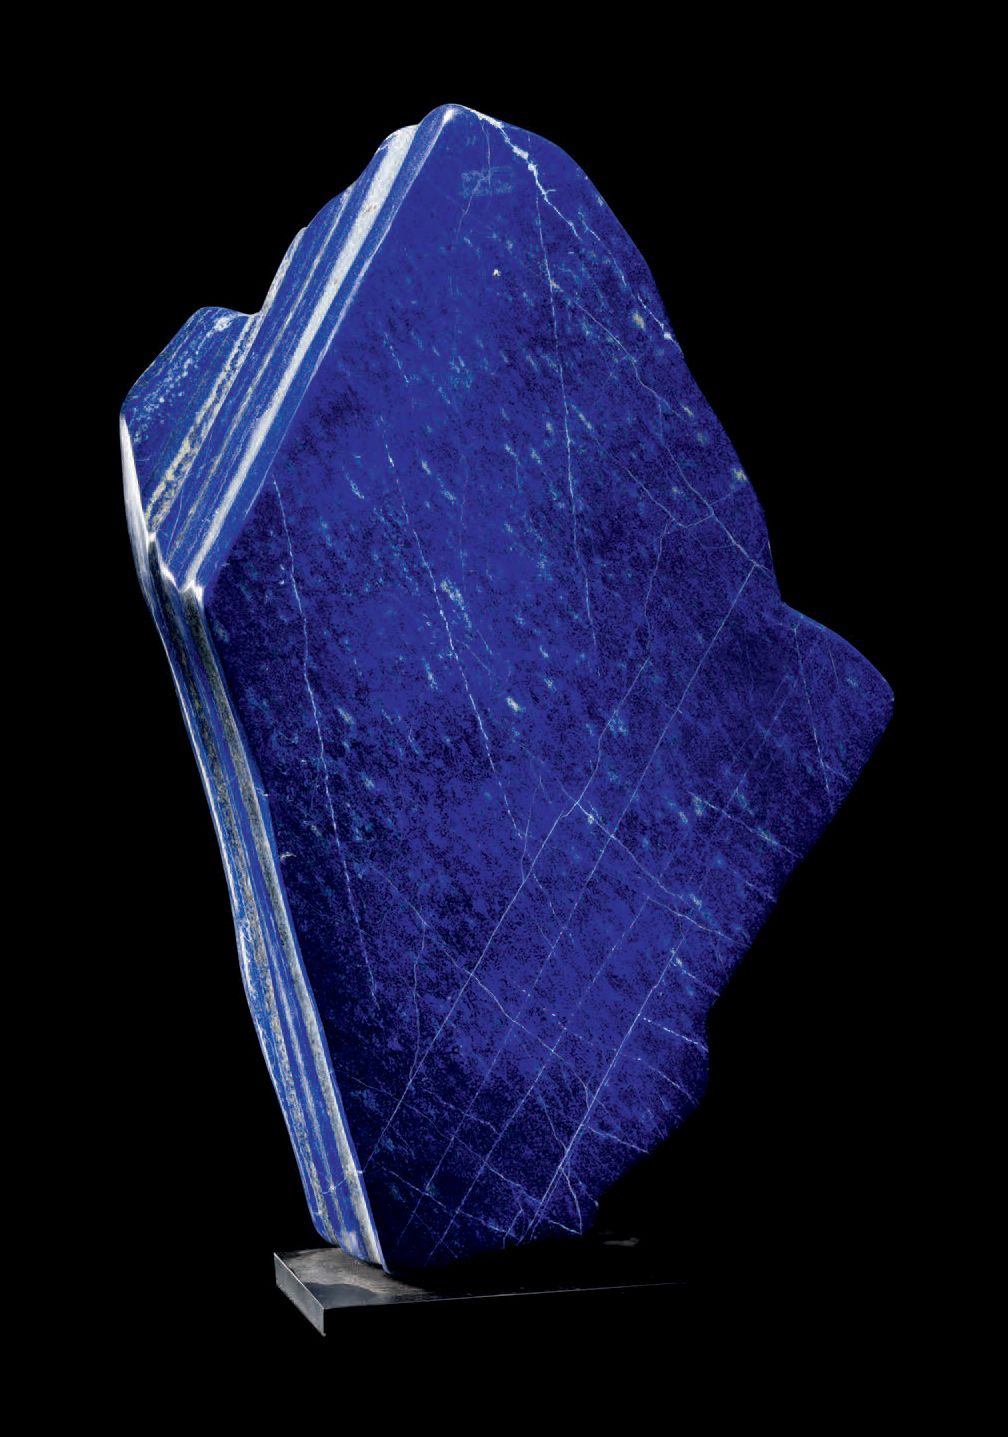 Null Deep blue lapis lazuli block on base
H. 16 15/16 in - W. 10 1/4 in
Lapis ha&hellip;